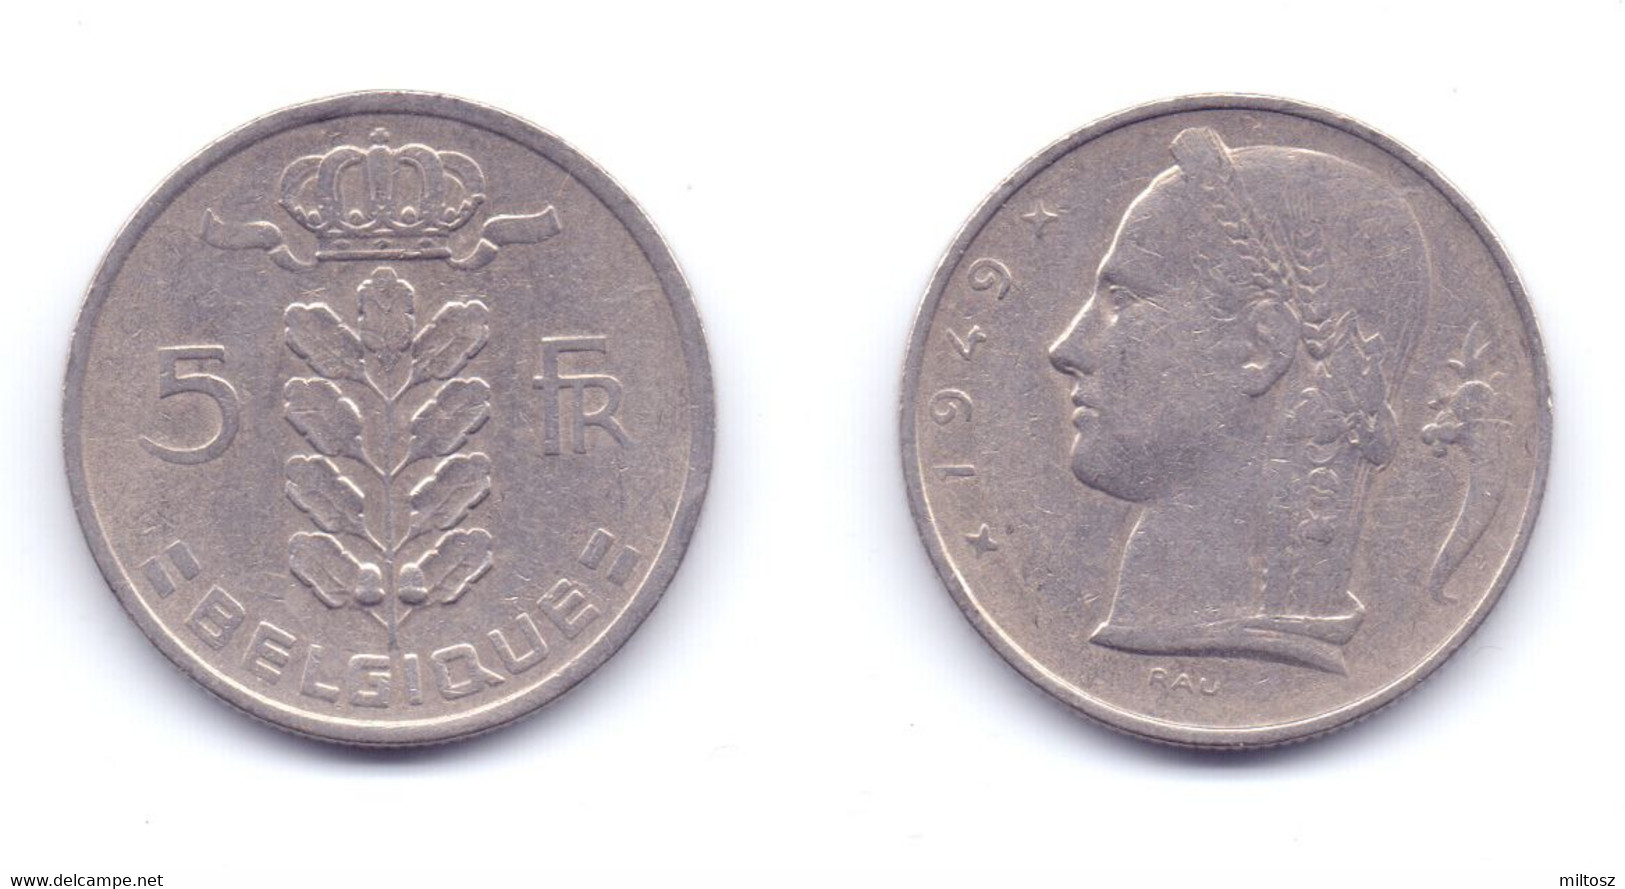 Belgium 5 Franc 1949 (legend In French) - 5 Franc